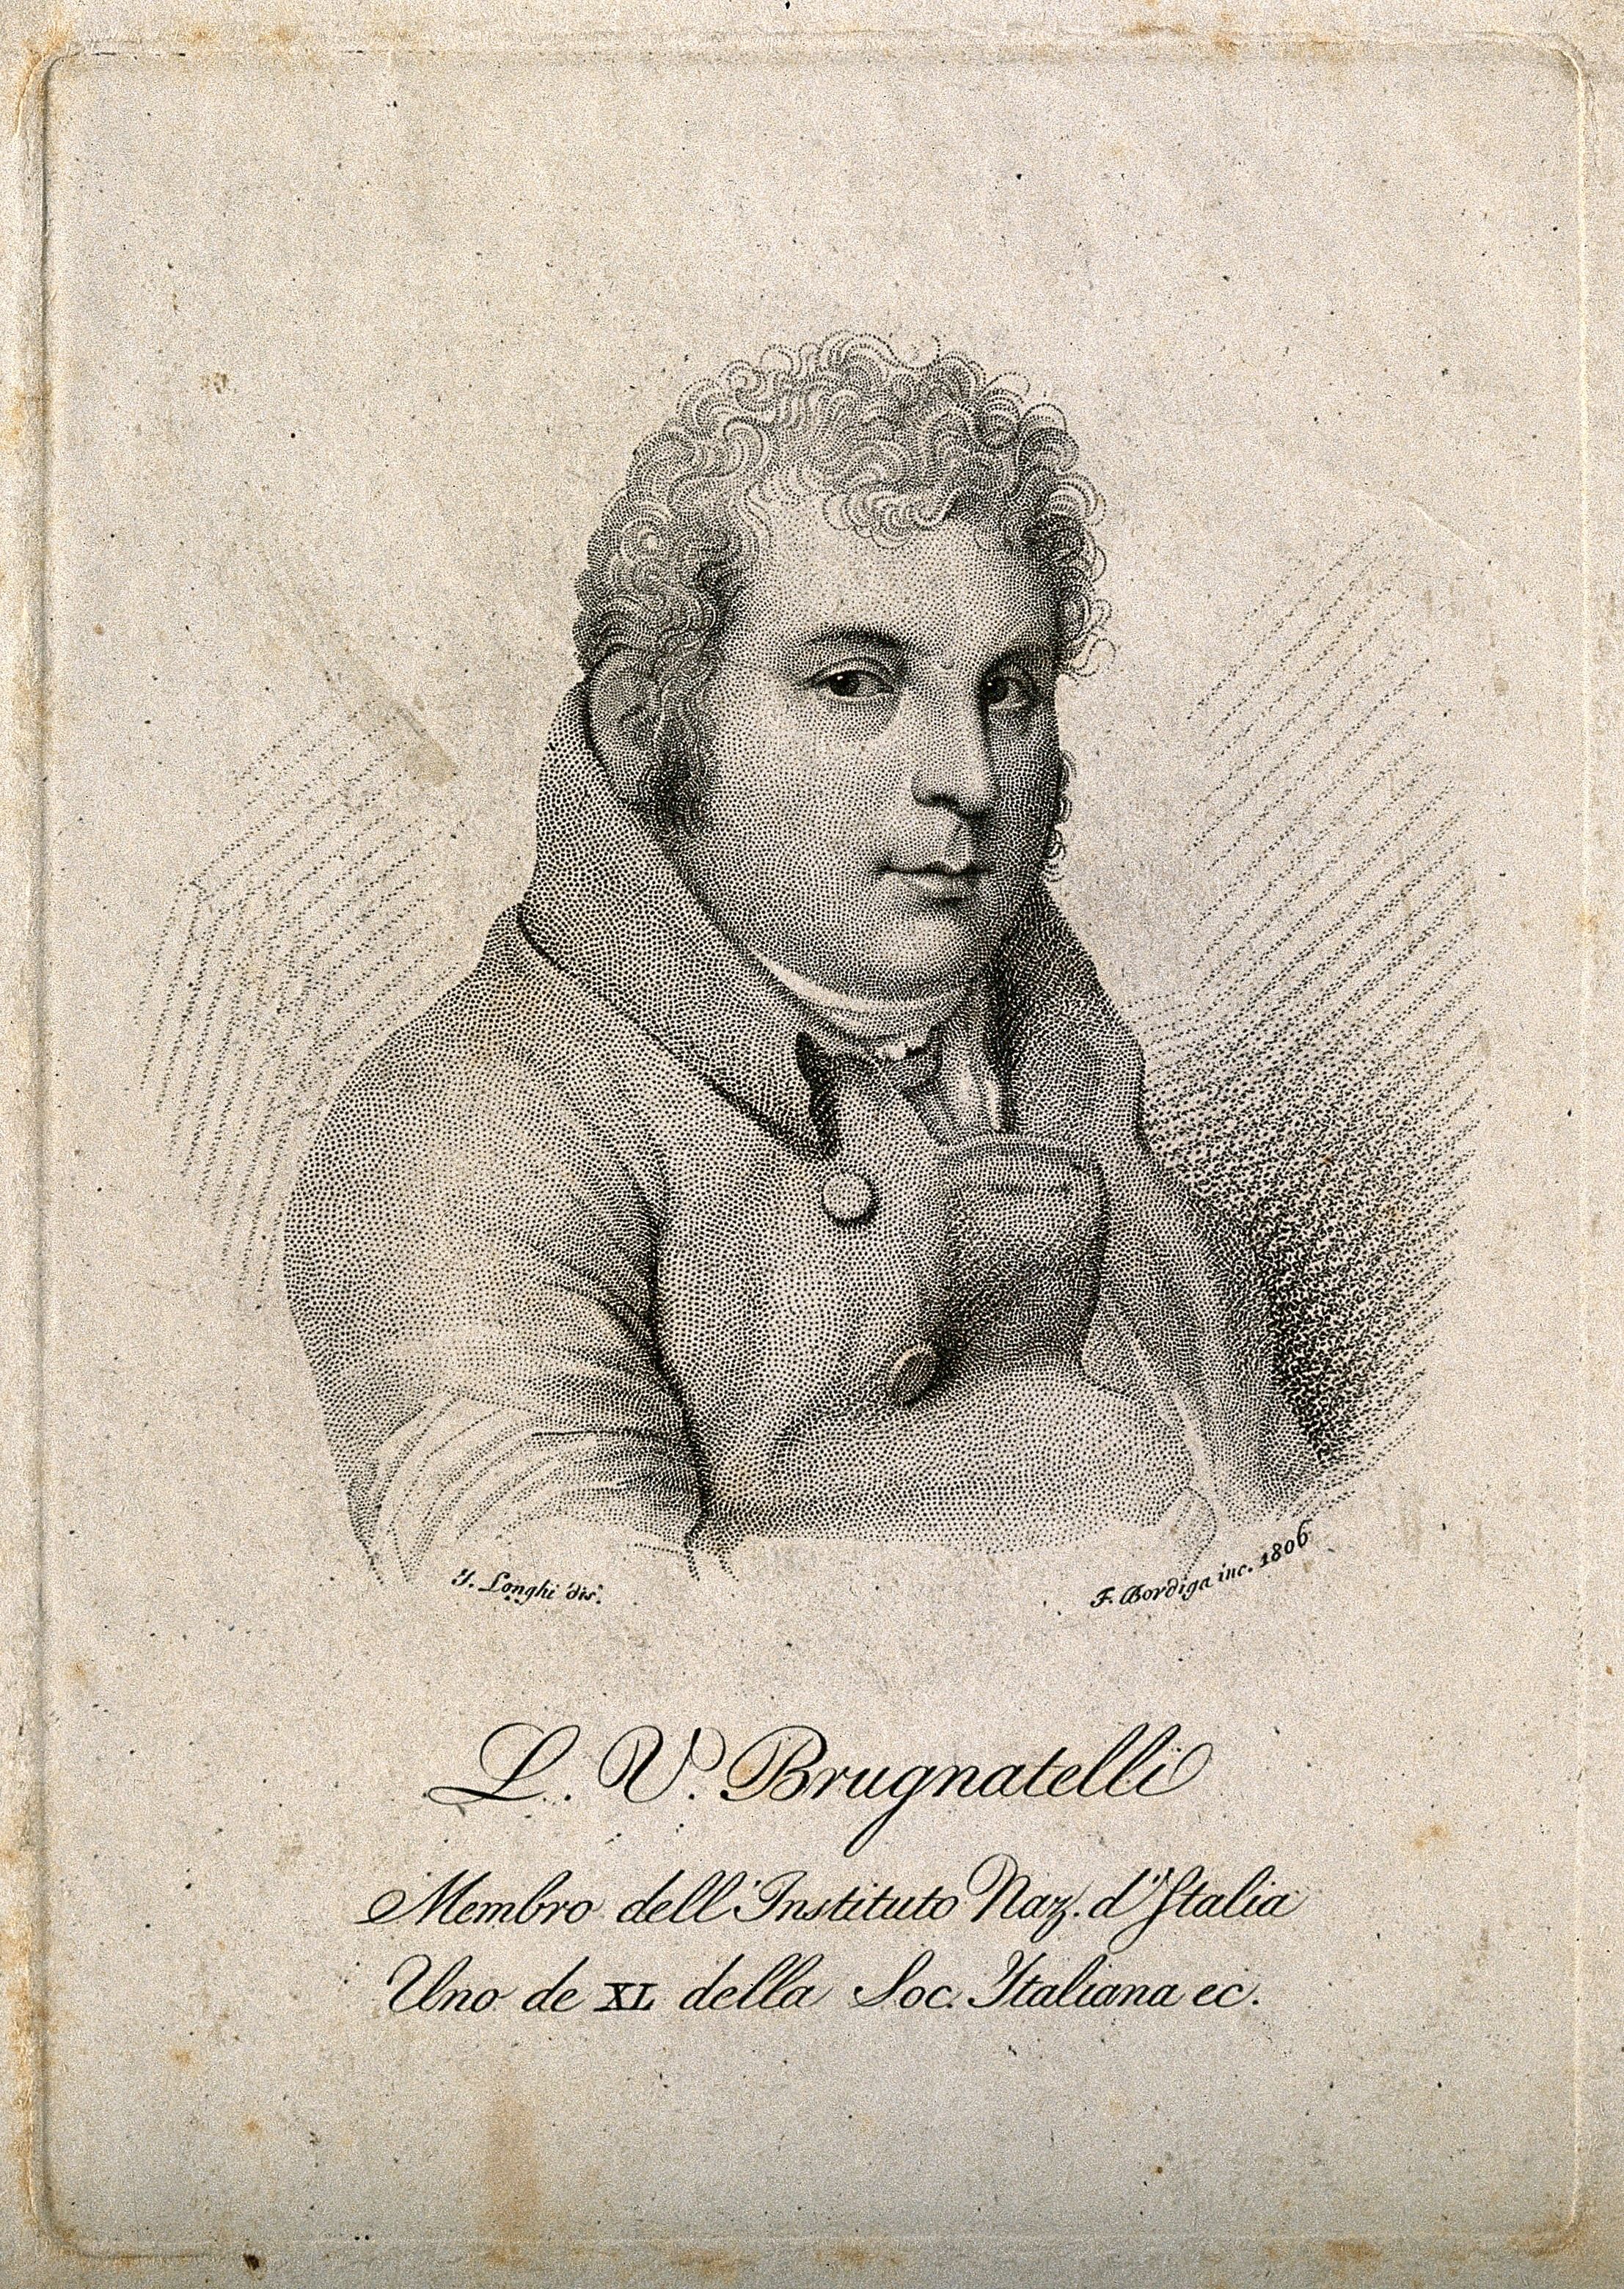 A print of Luigi Valentino Brugnatelli, the Italian inventor credited to inventing electroplating.